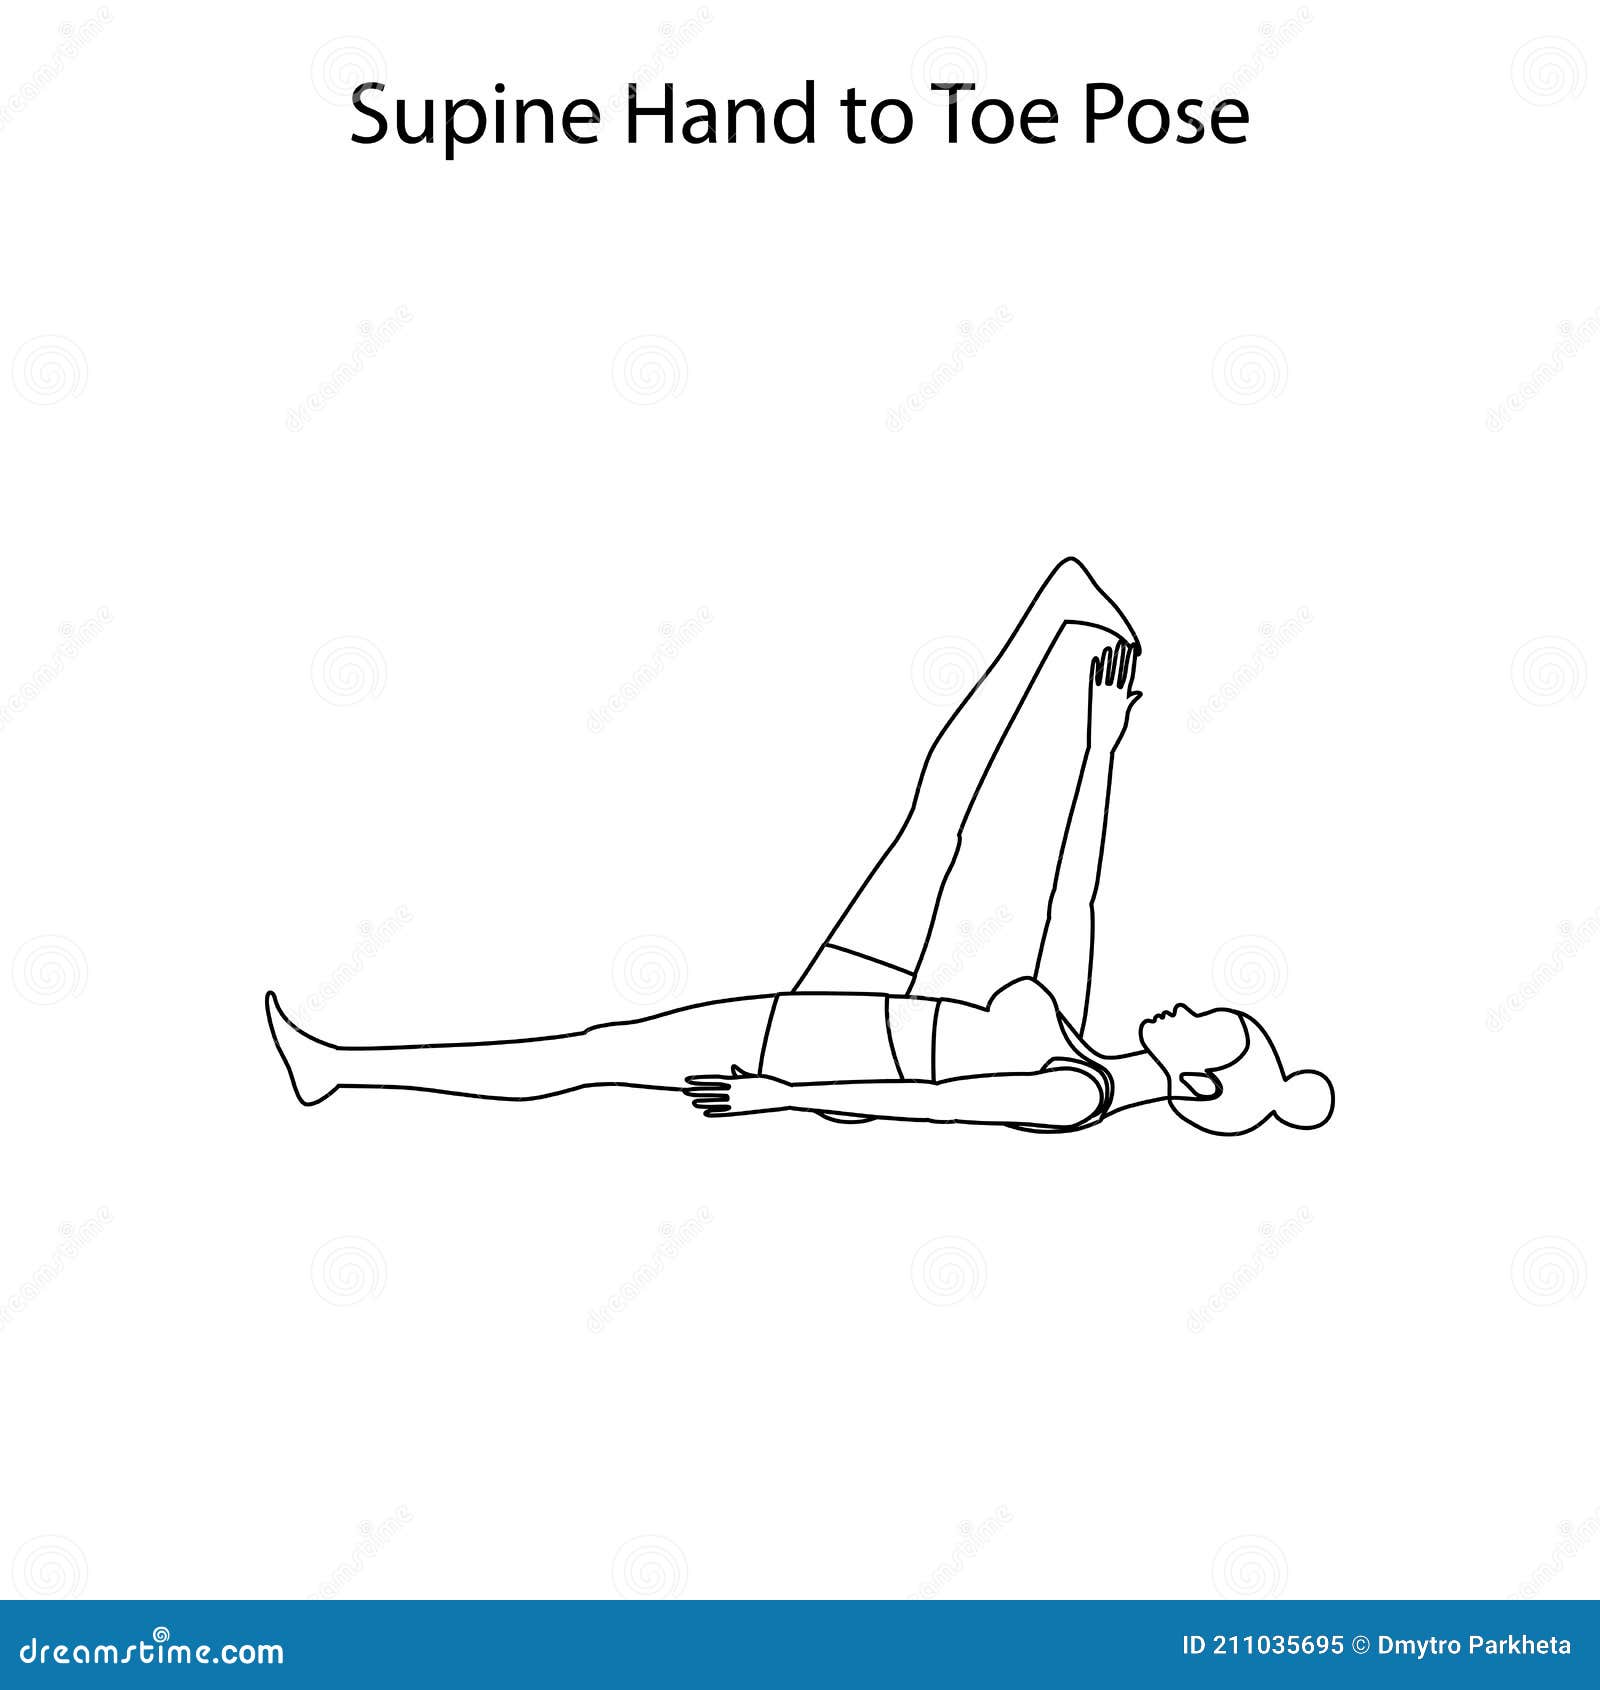 Reclined Hand to Big Toe Pose 1 2 3 | Supta Padangusthasana 1 2 3 | Supine  Yoga Pose - YouTube